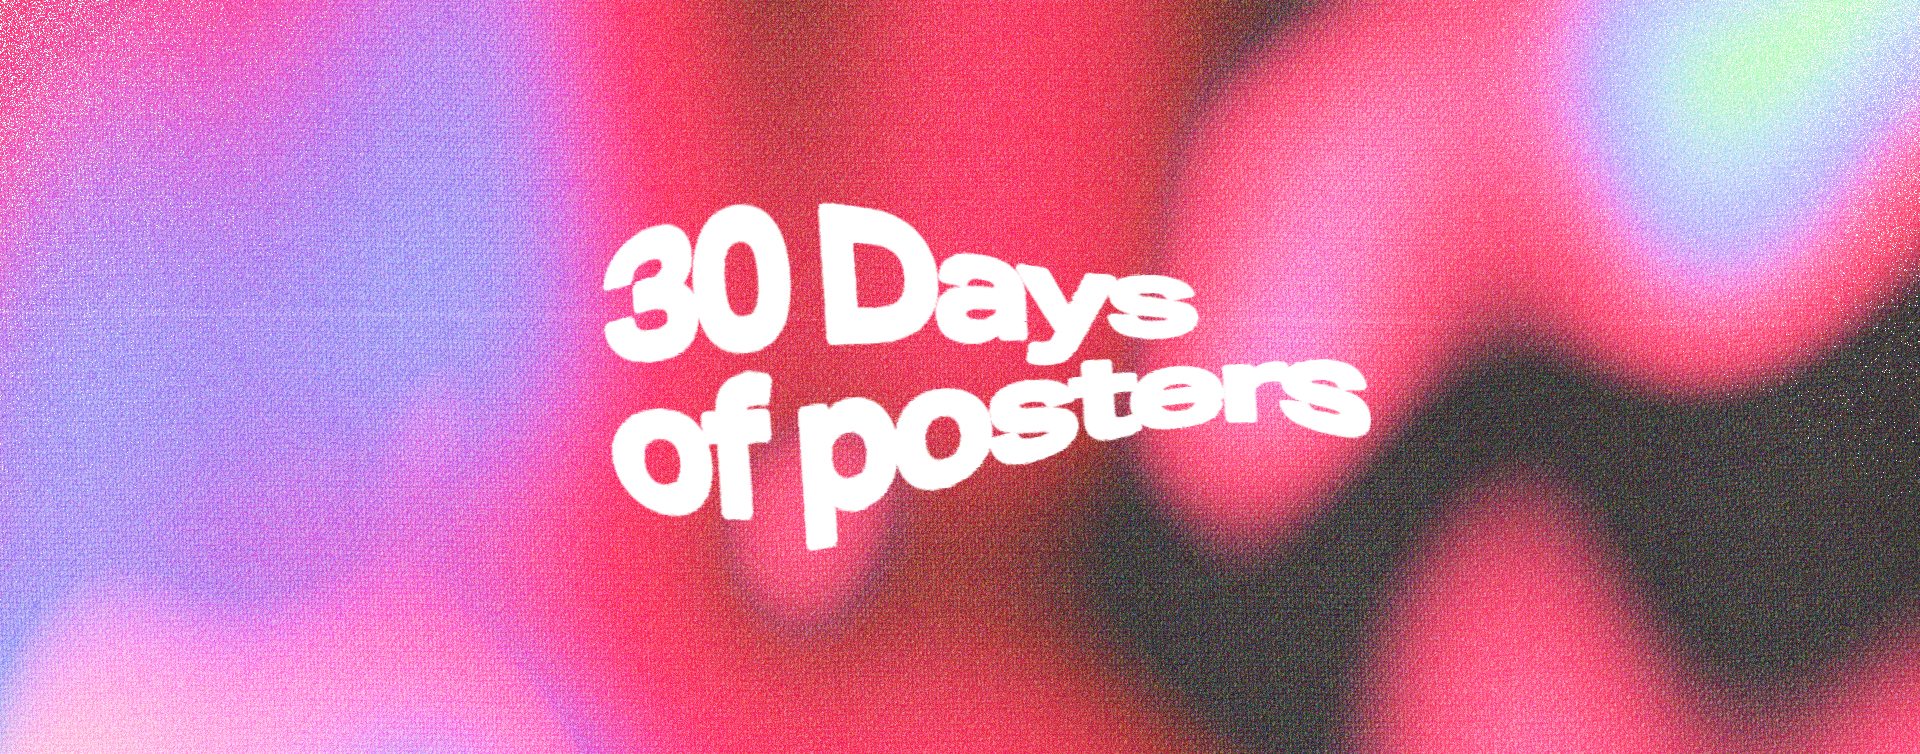 banner-30daysofposters-dailychallenge-poster-musique-adrienducrocq-ducrocq-adrien-lille-graphiste-challenge